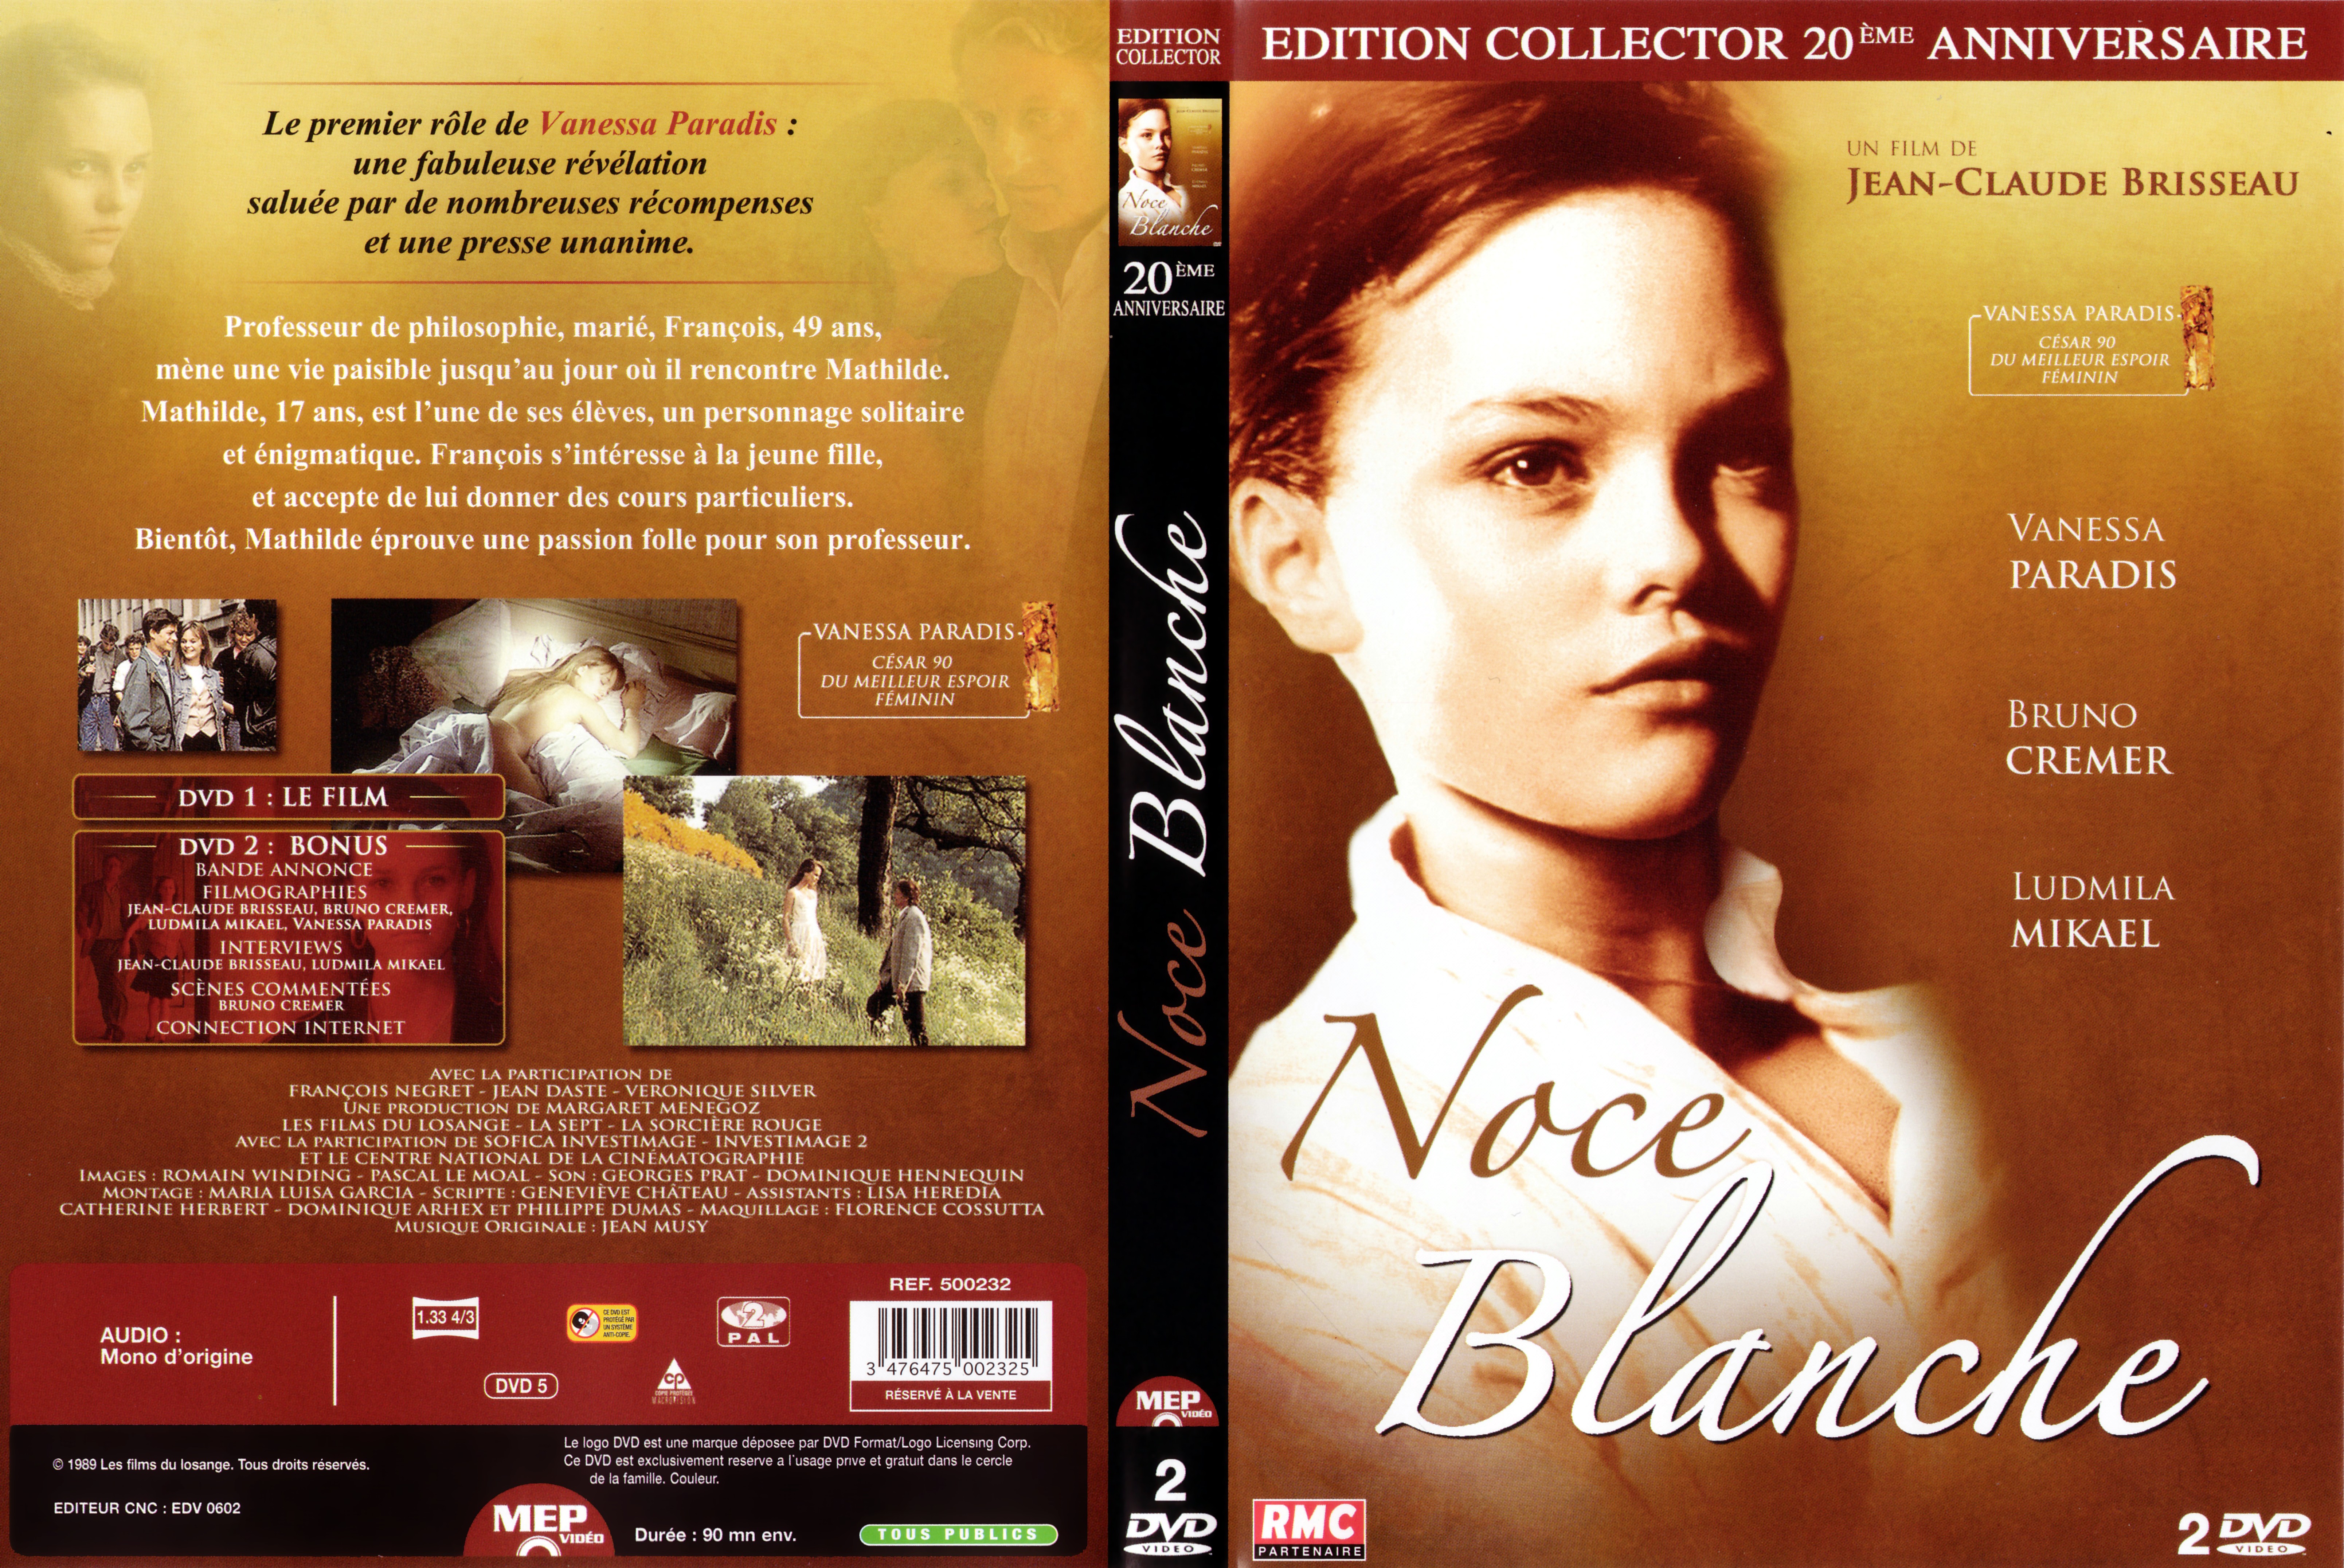 Jaquette DVD Noce blanche v2